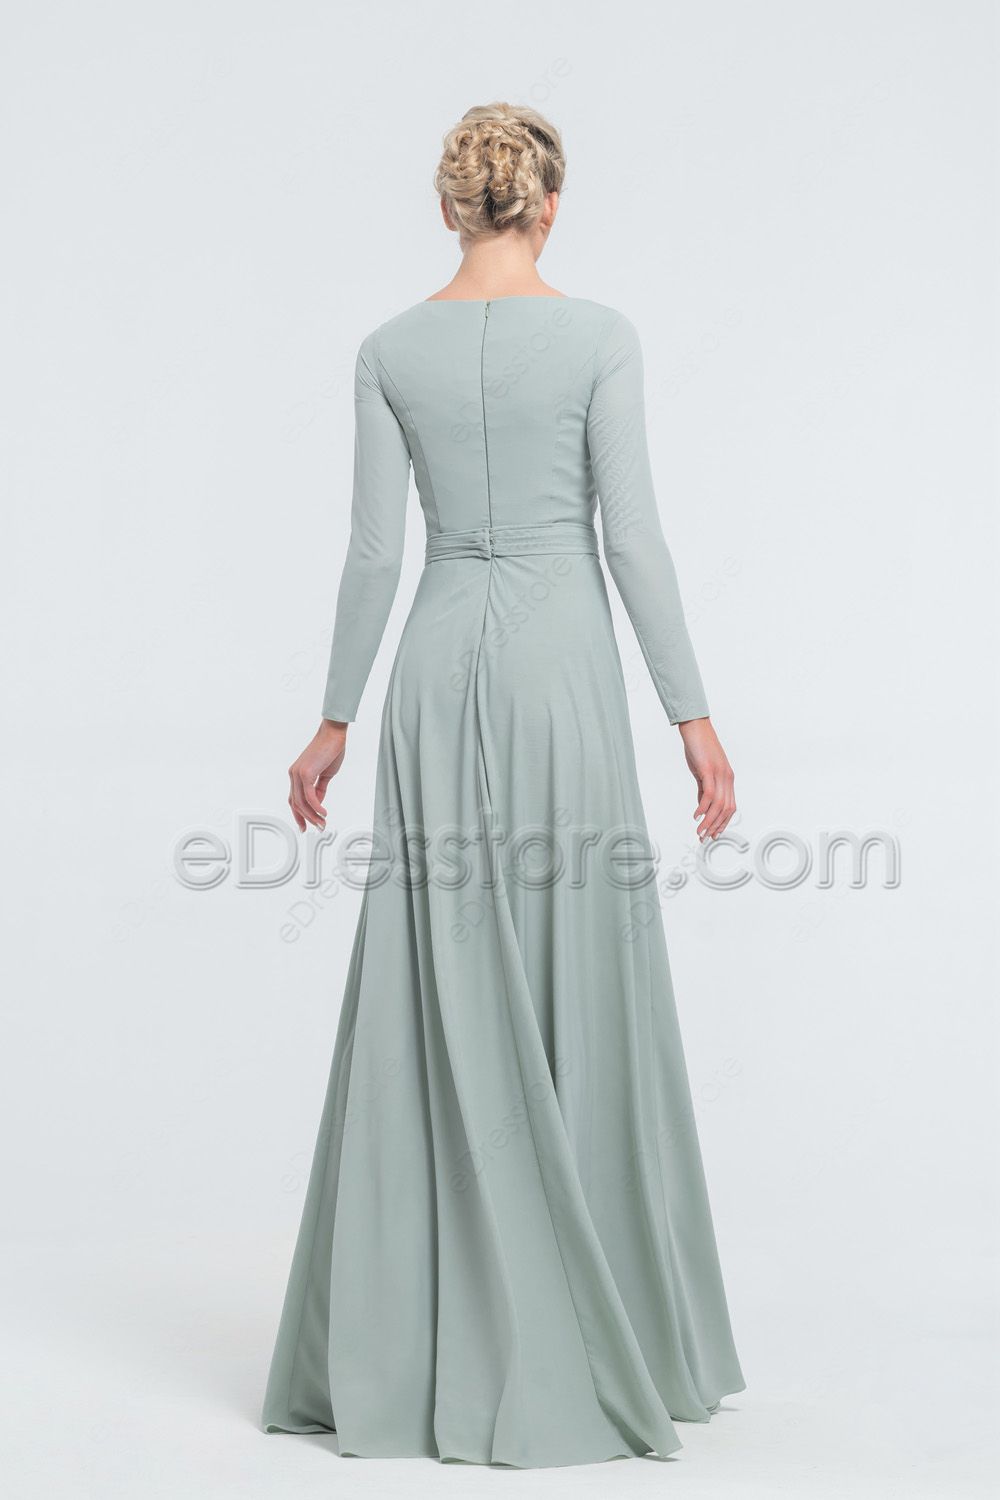 Modest Dusty Sage Bridesmaid Dresses Long Sleeves | eDresstore